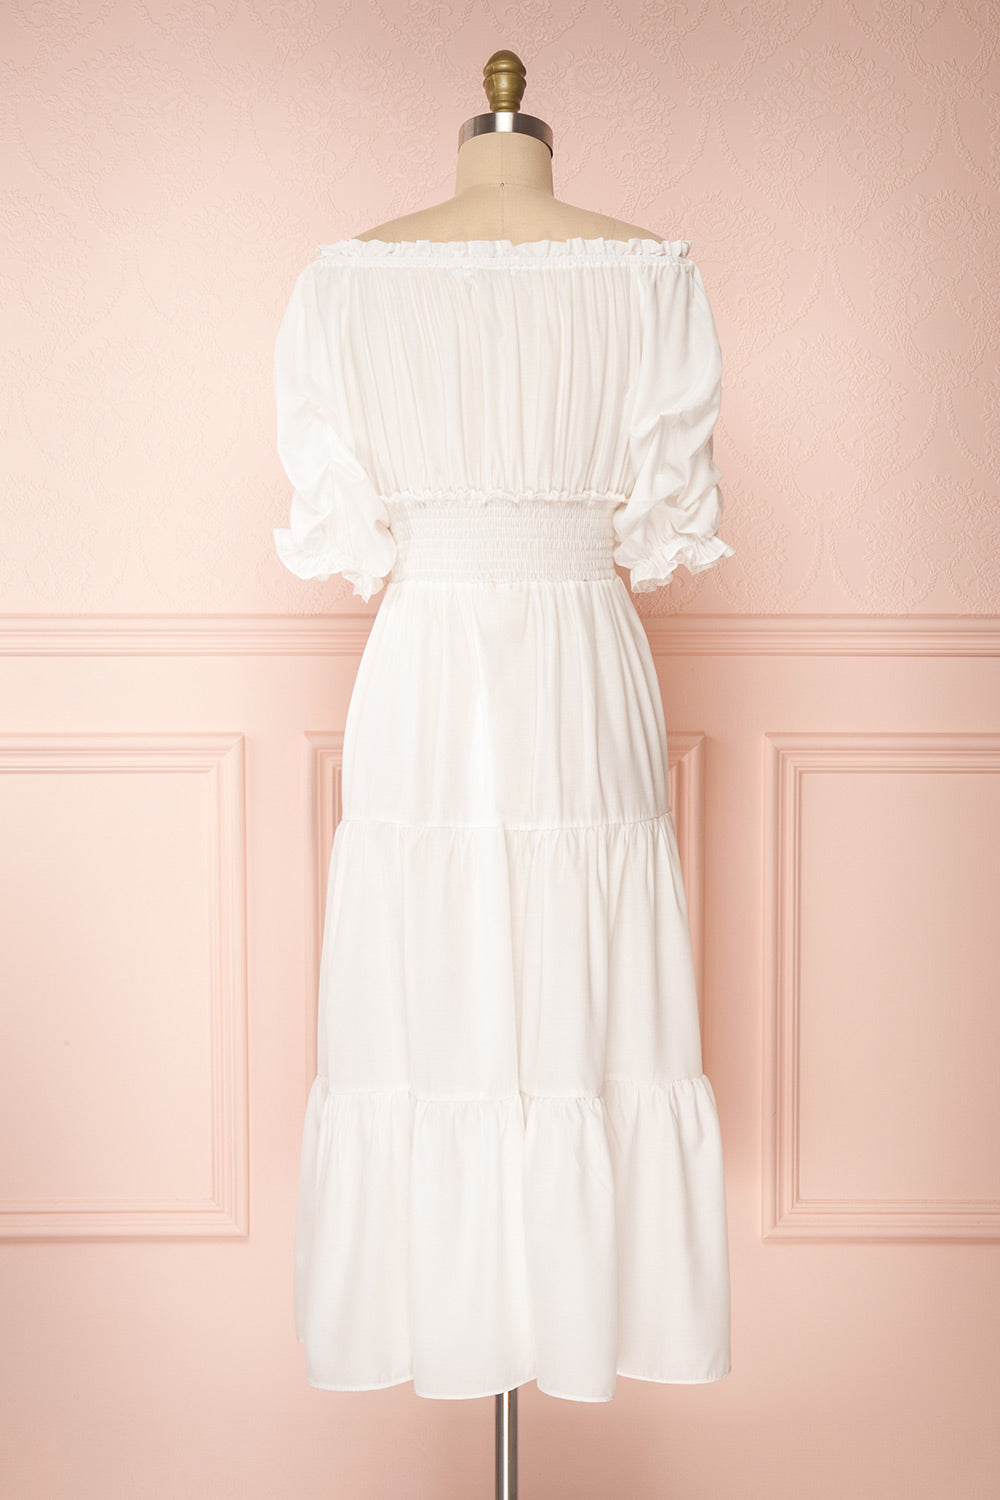 Catolie White Layered Midi Dress w/ Frills | Boutique 1861 back view